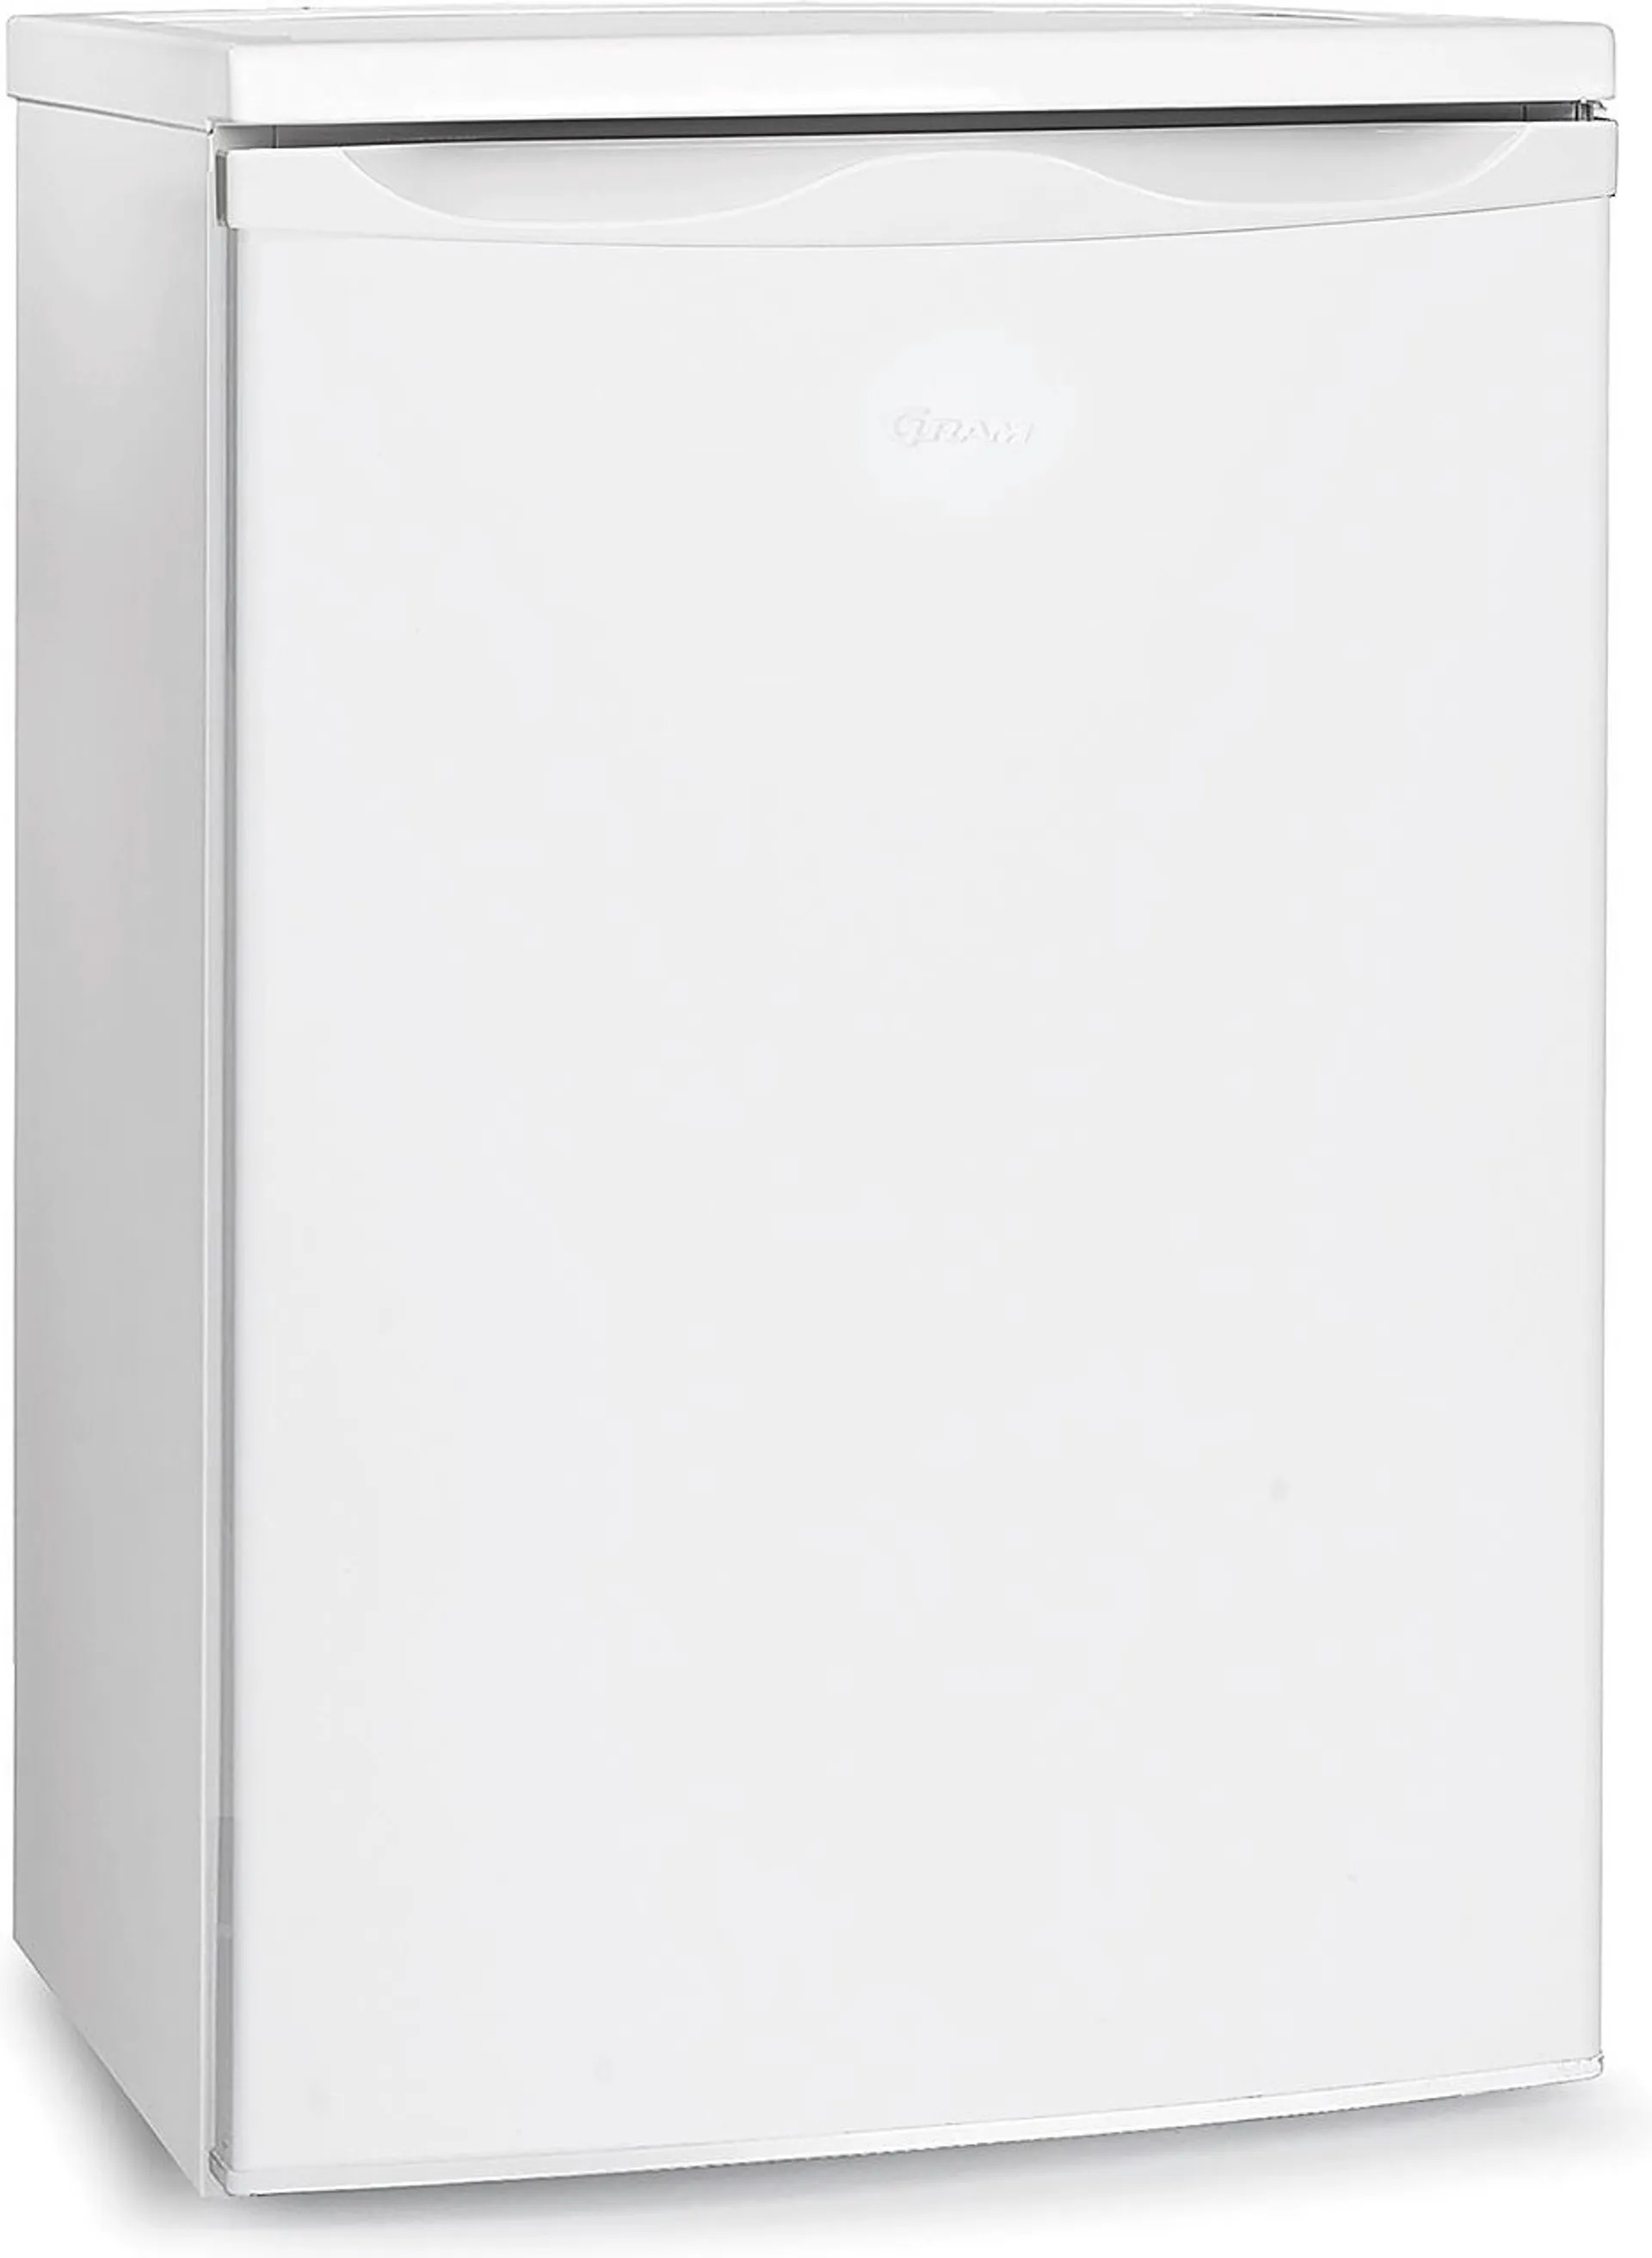 Gram jääkaappi KS 1135-90/1 valkoinen - 1